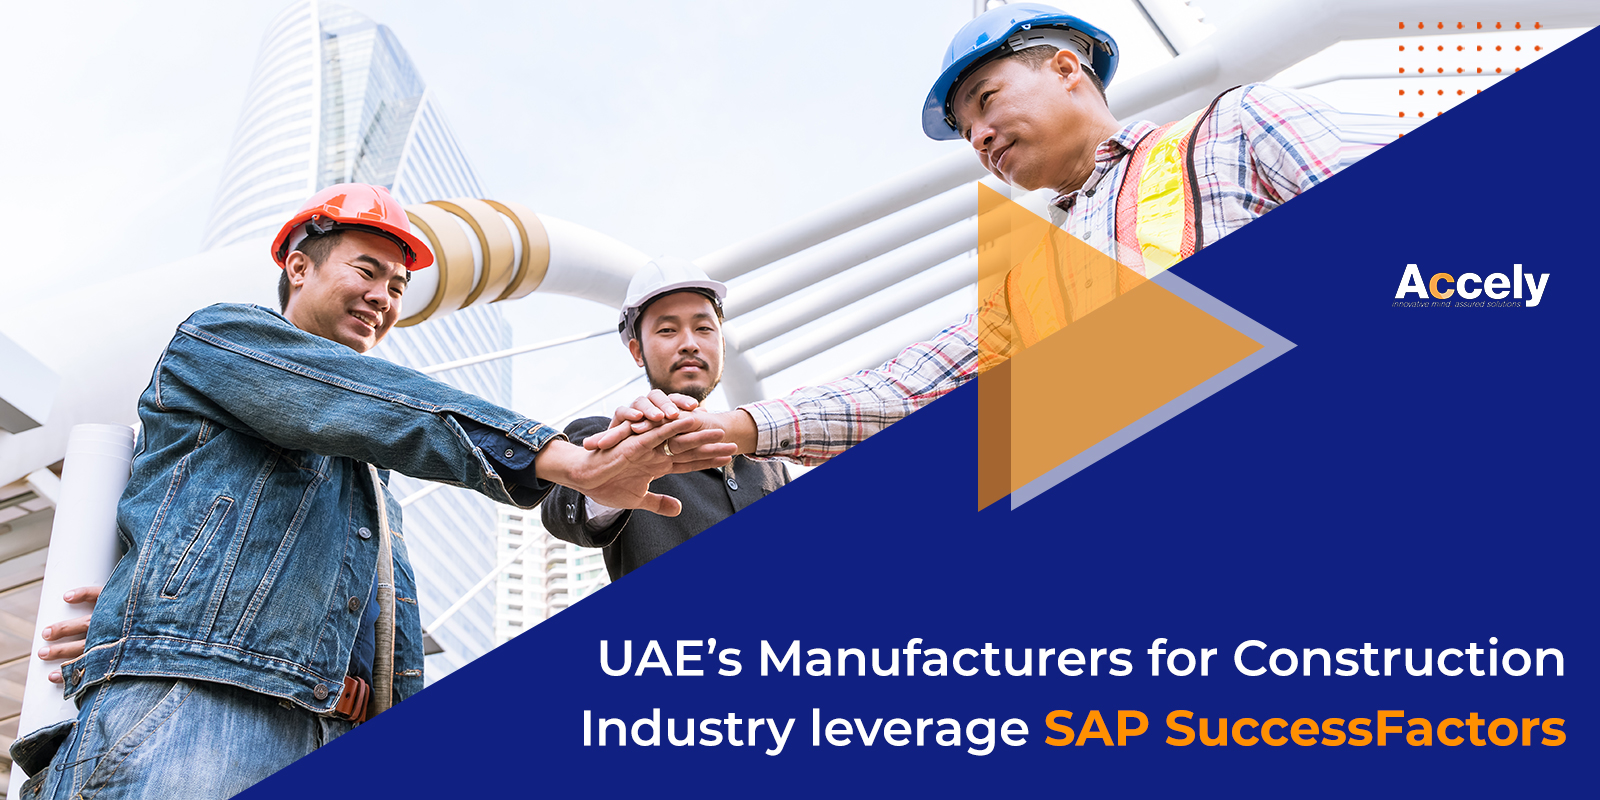 UAE’s Manufacturers for Construction Industry leverage SAP SuccessFactors